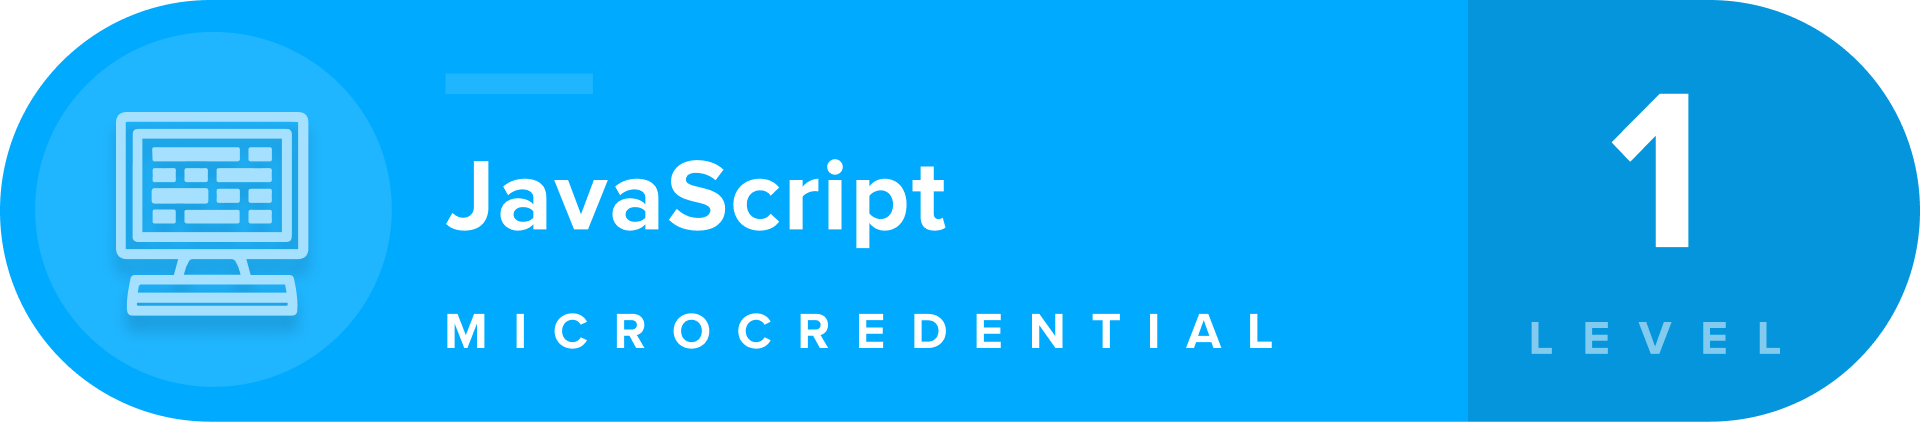 JavaScript microcredentials level 1 badge